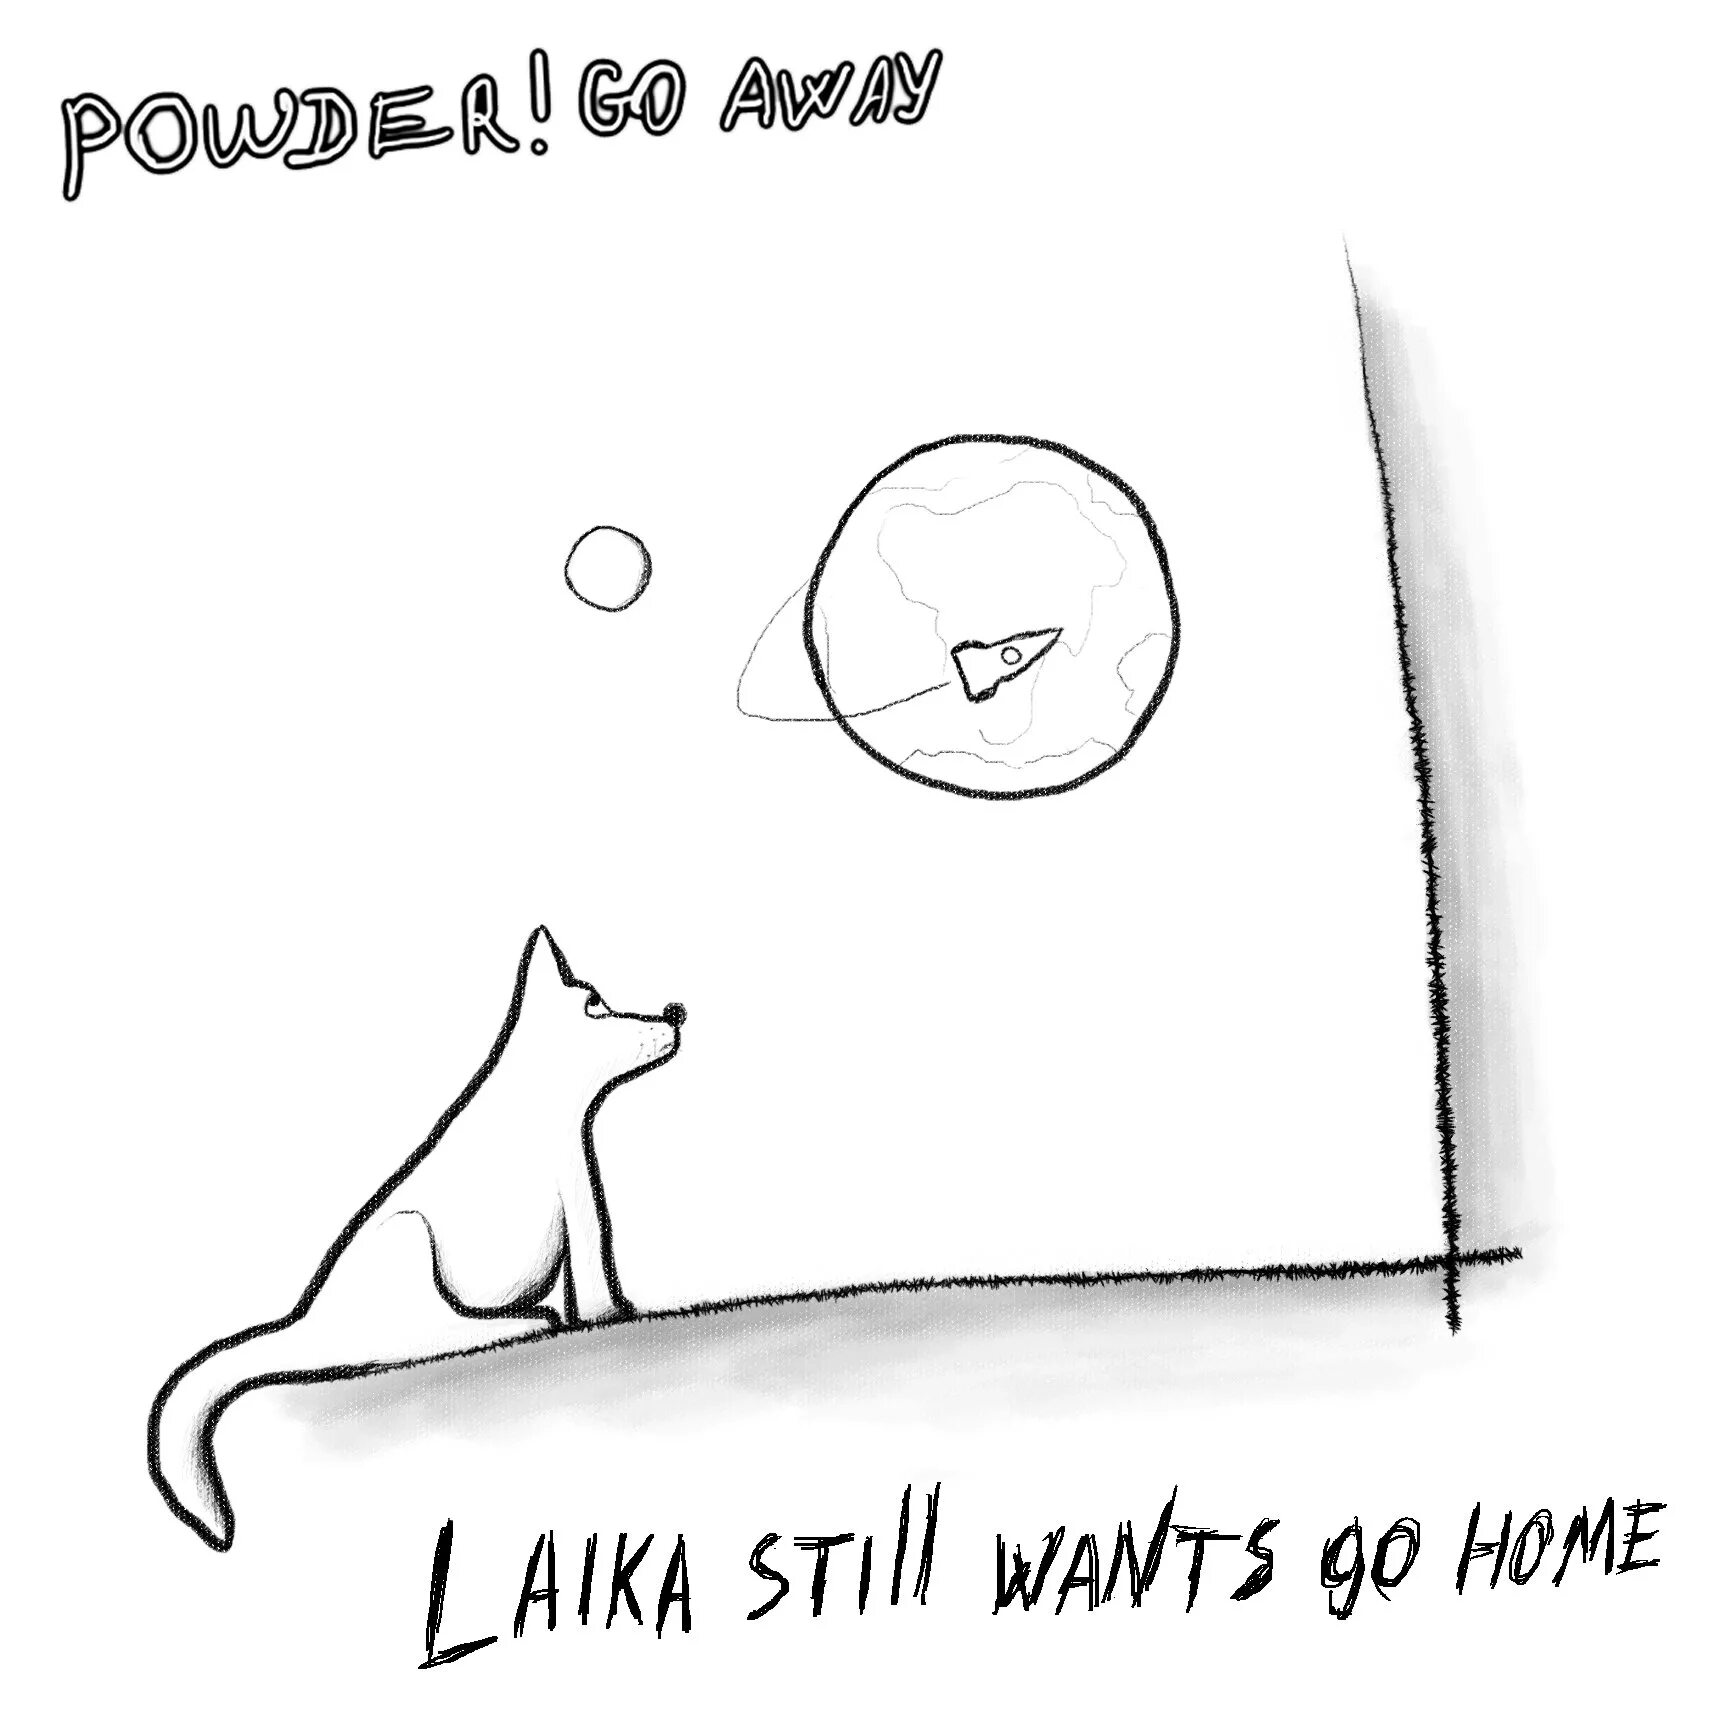 Powder go away laika. Laika still wants go Home. Go away. Go away кот.